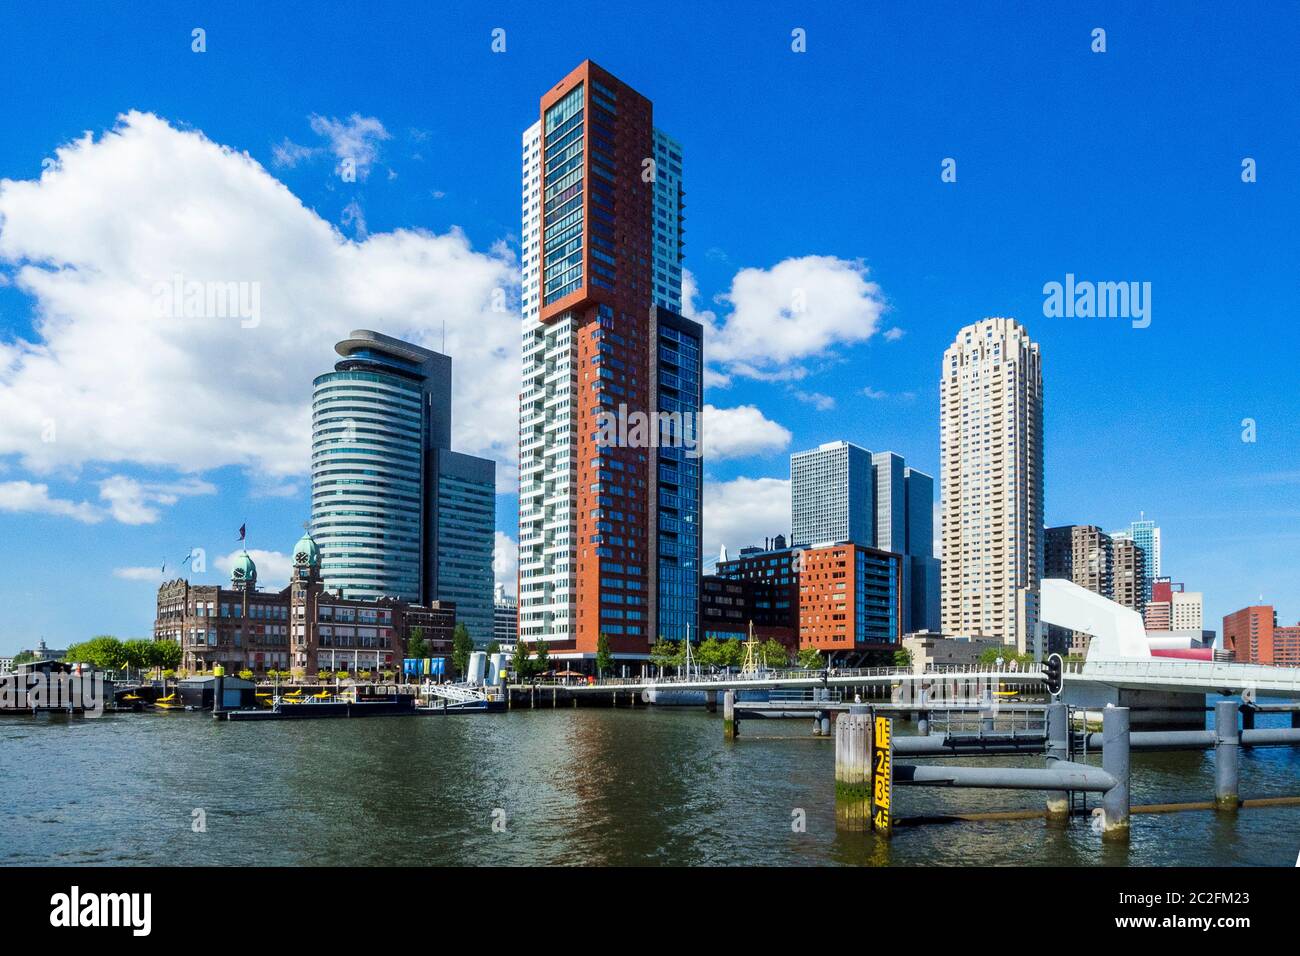 Europe, Netherlands - City of Rotterdam Stock Photo